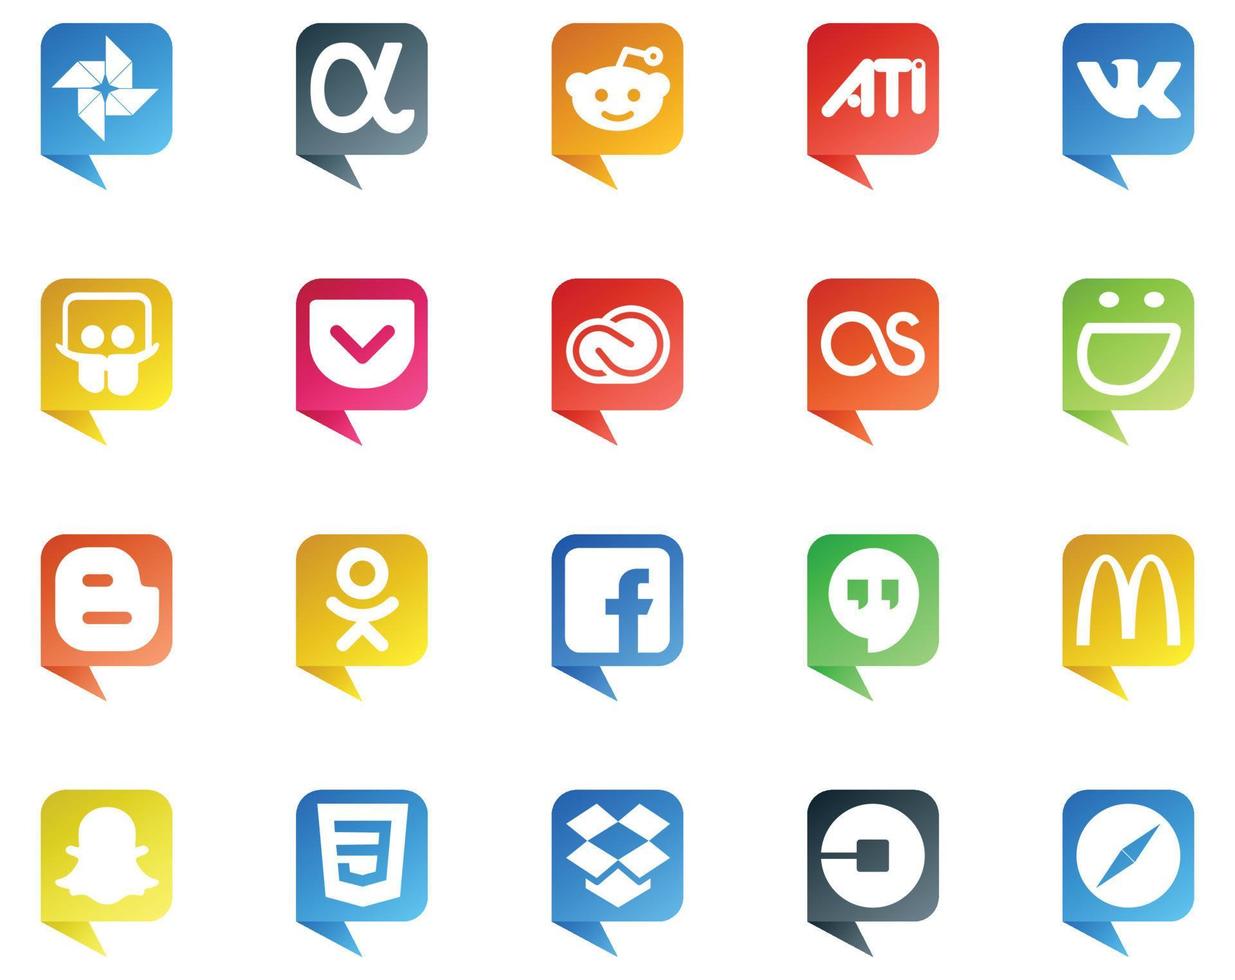 20 sociaal media toespraak bubbel stijl logo Leuk vinden snapchat hangouts cc facebook blogger vector